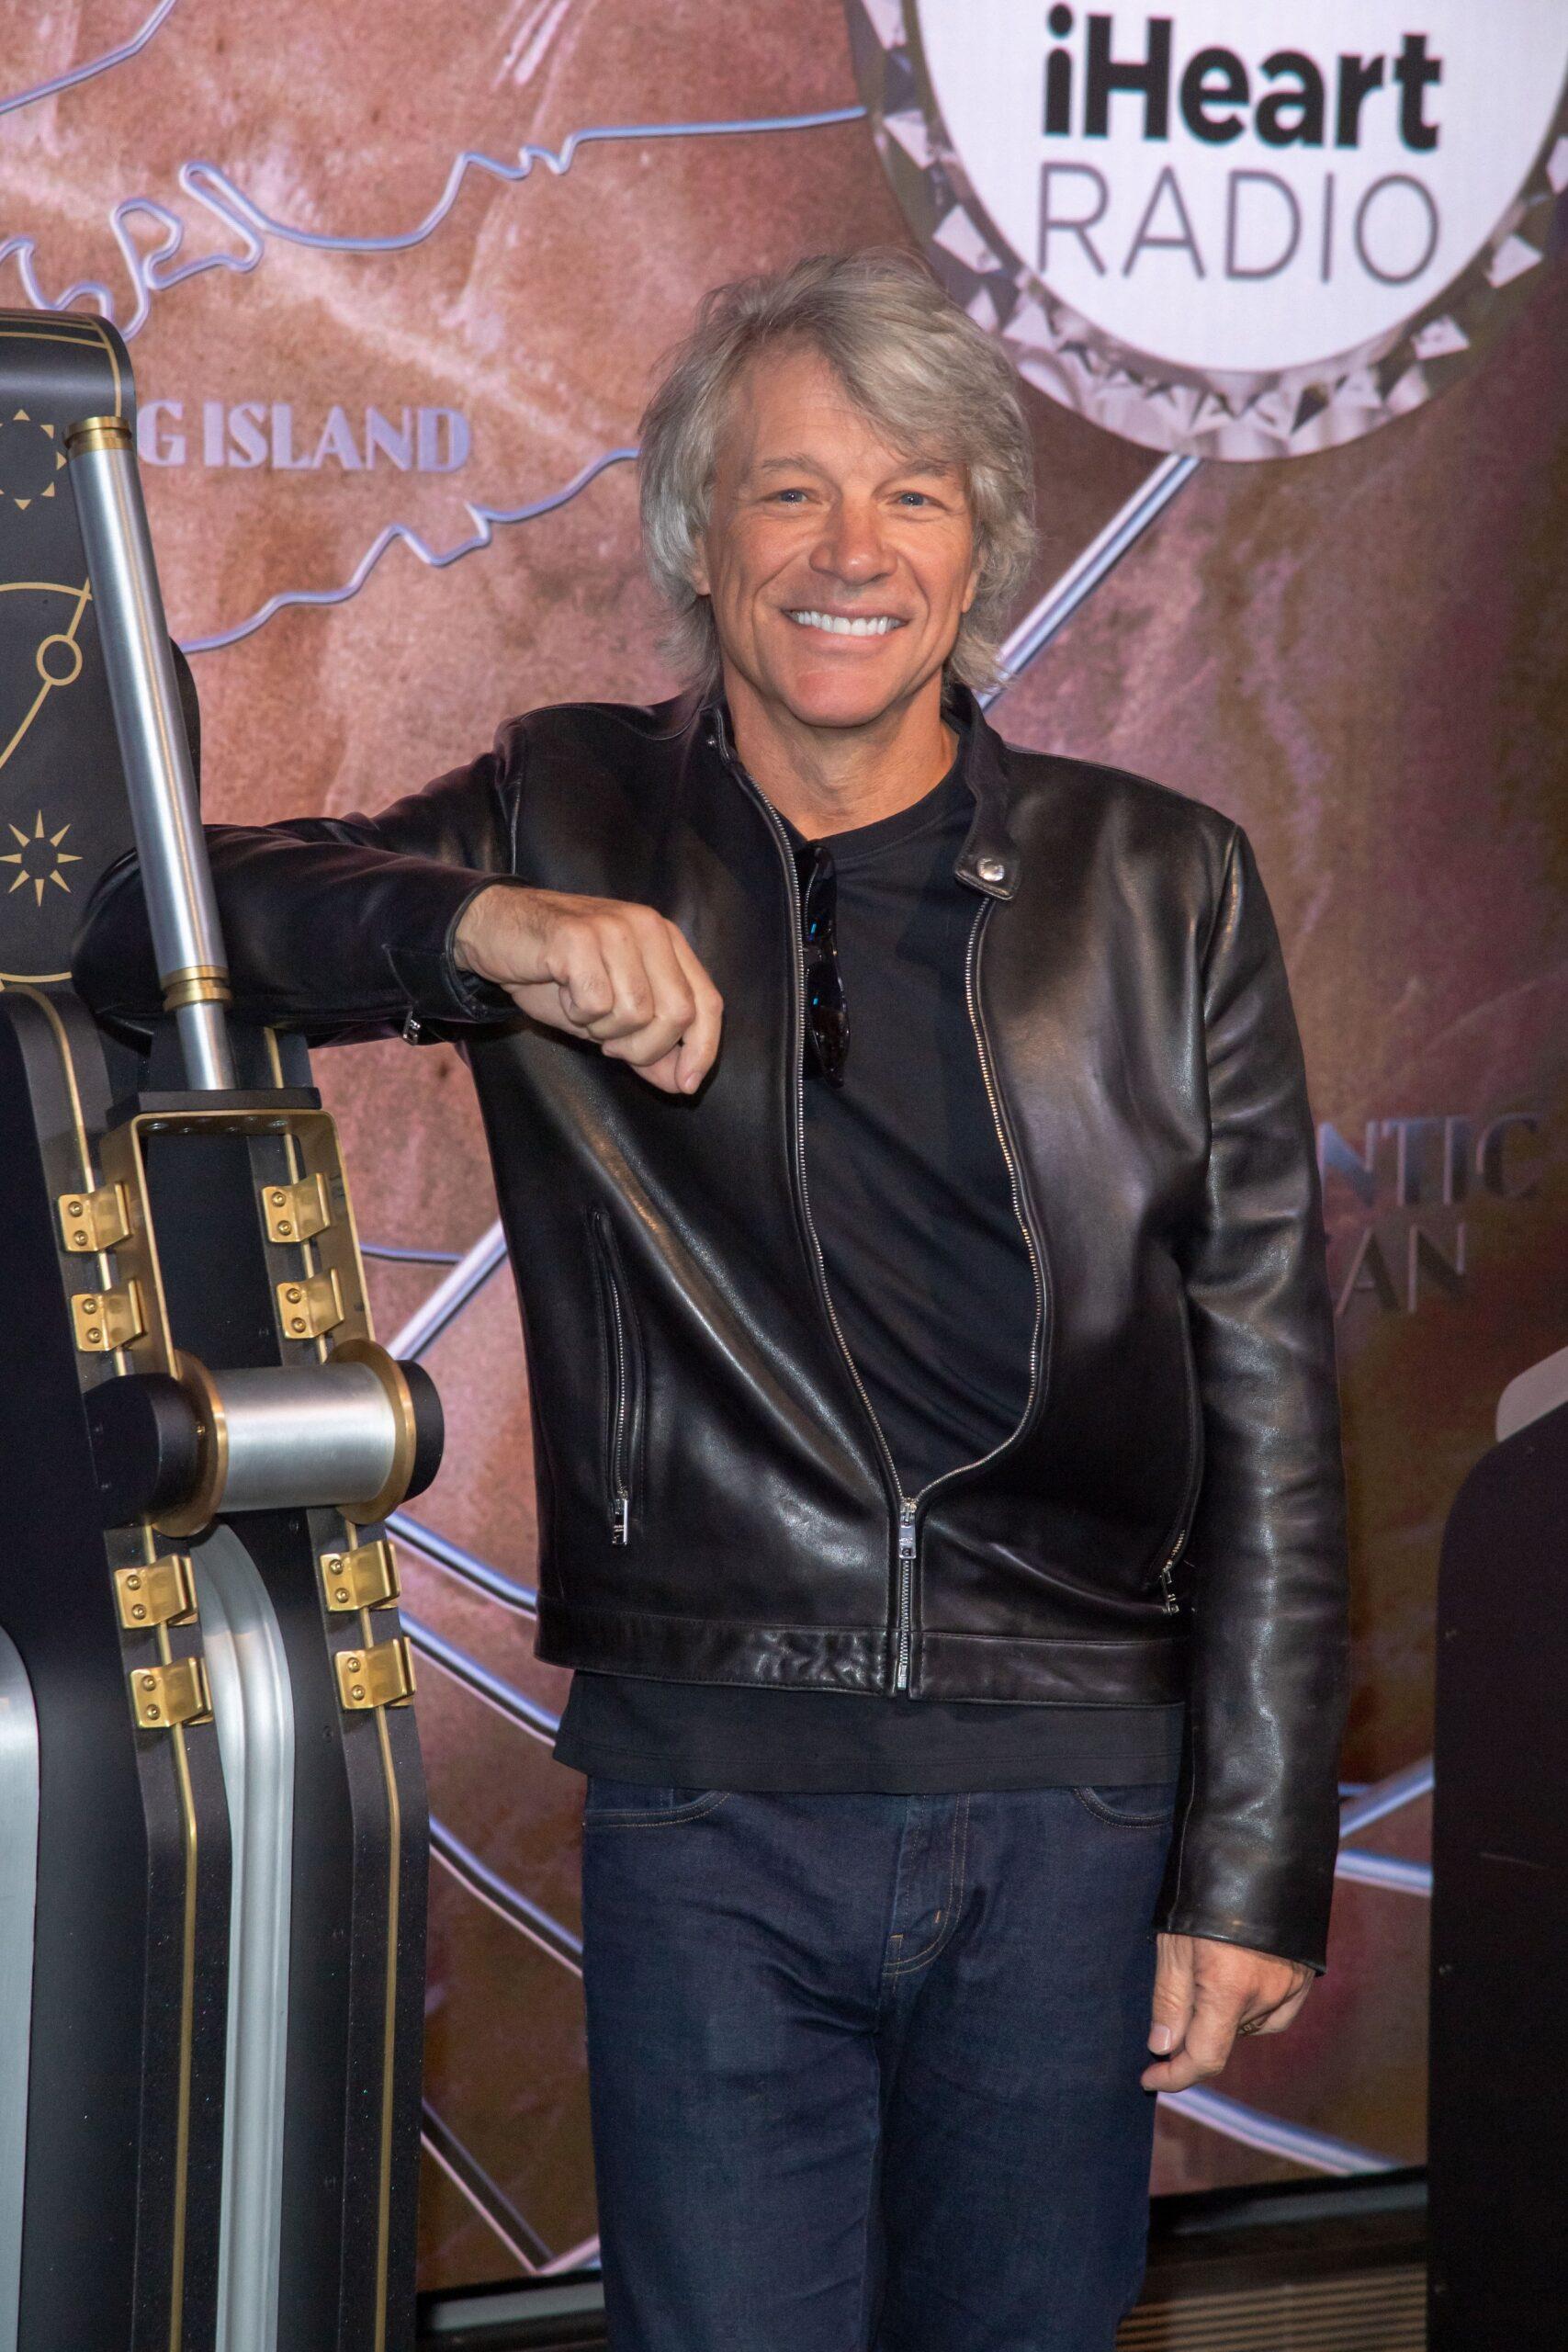 Jon Bon Jovi at iHeartRadio event